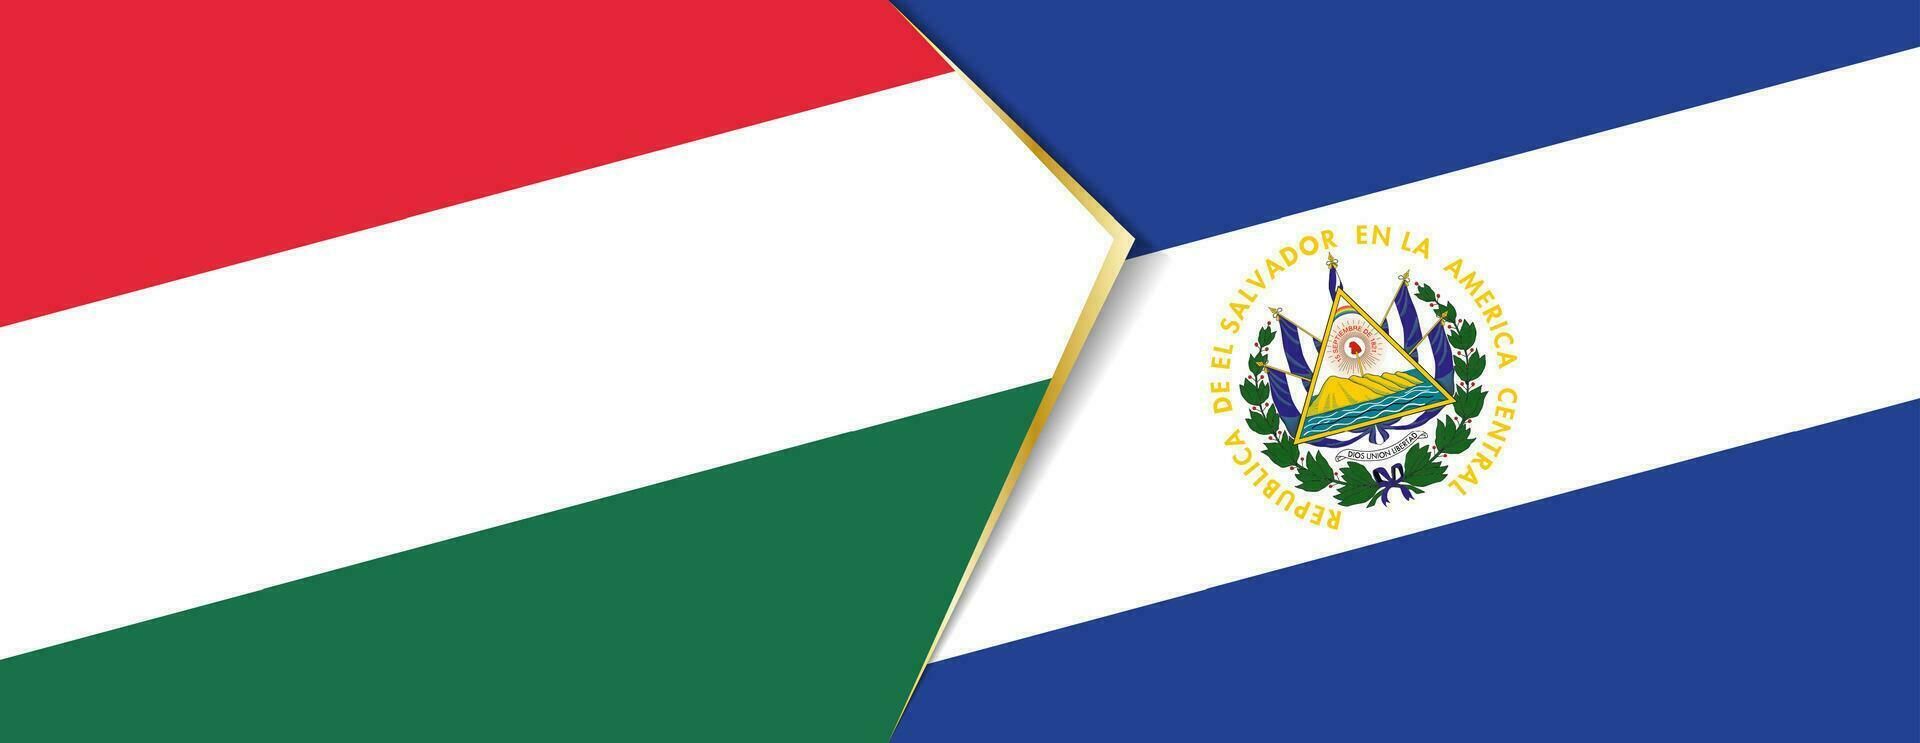 Ungheria e EL salvador bandiere, Due vettore bandiere.